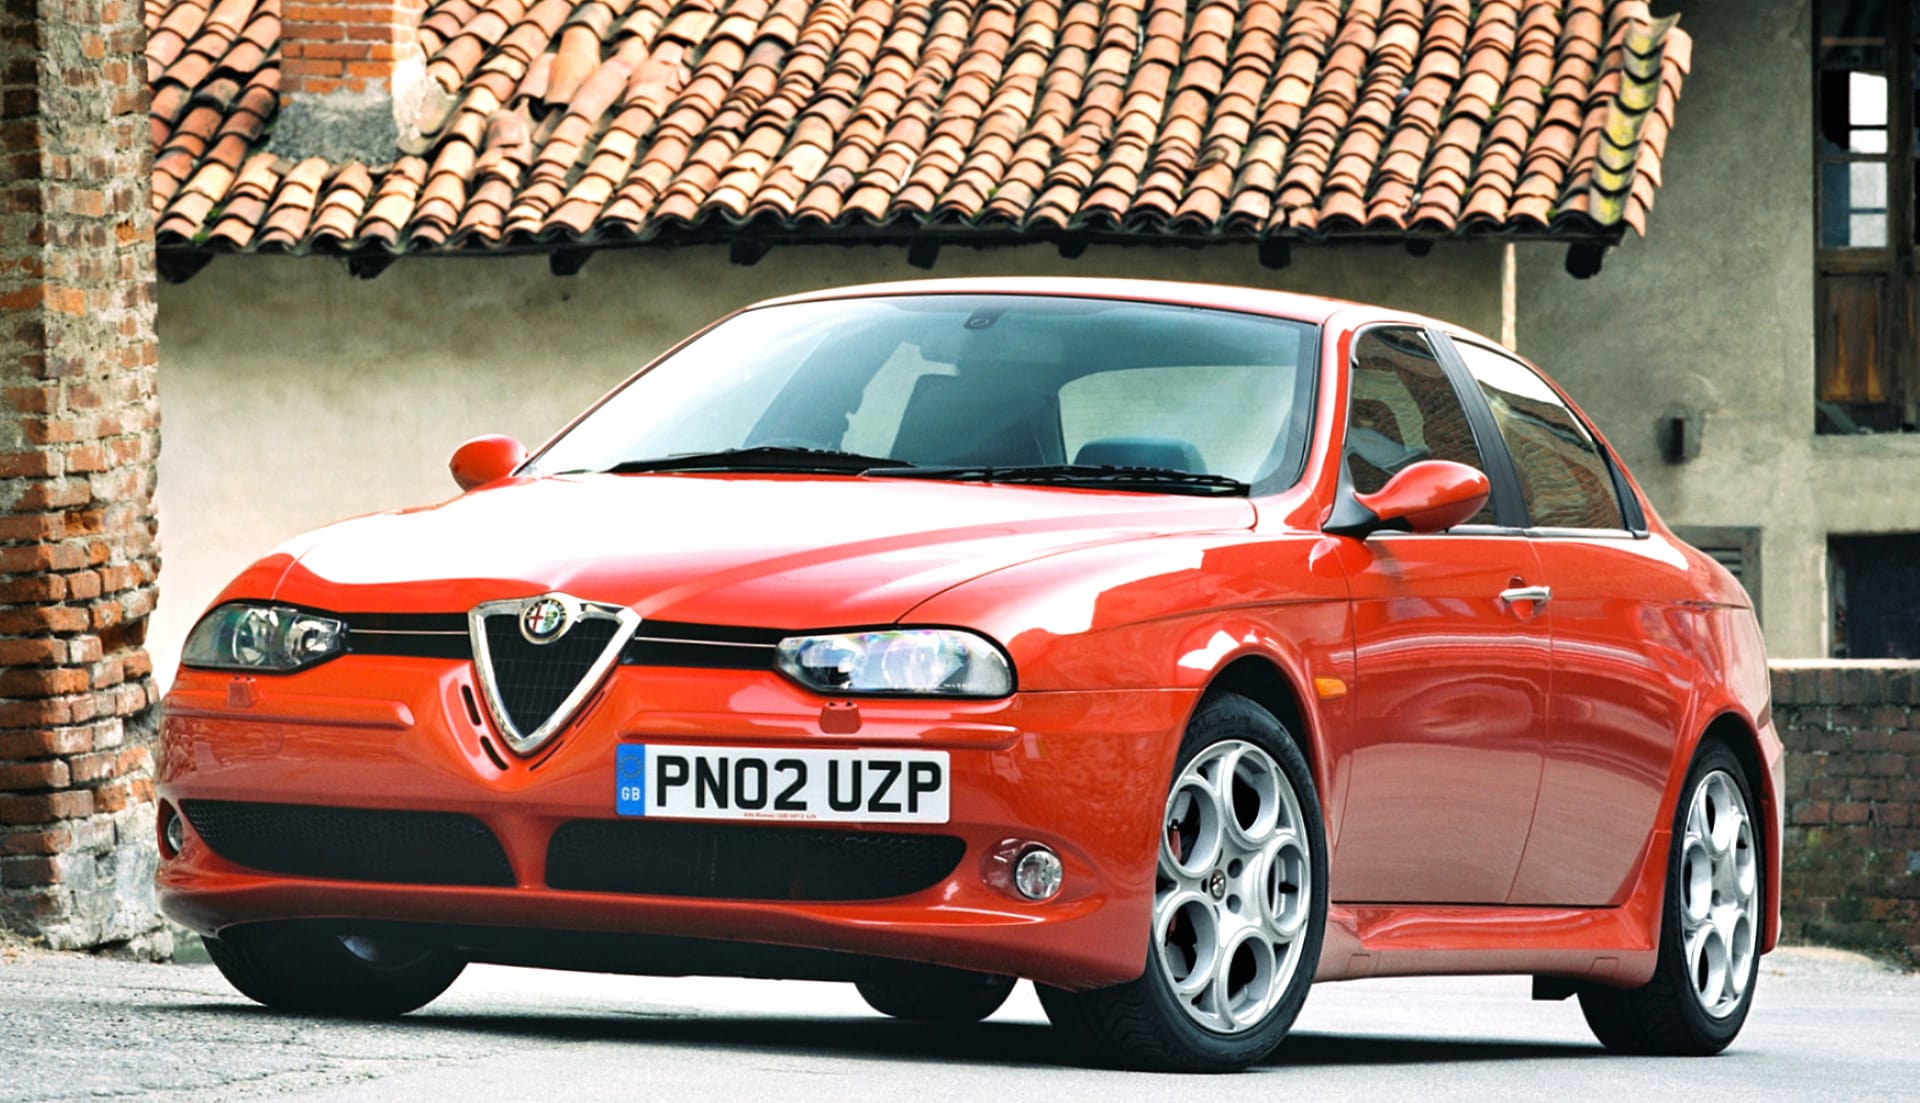 Alfa Romeo 156 GTA at 1280 x 960 size wallpapers HD quality